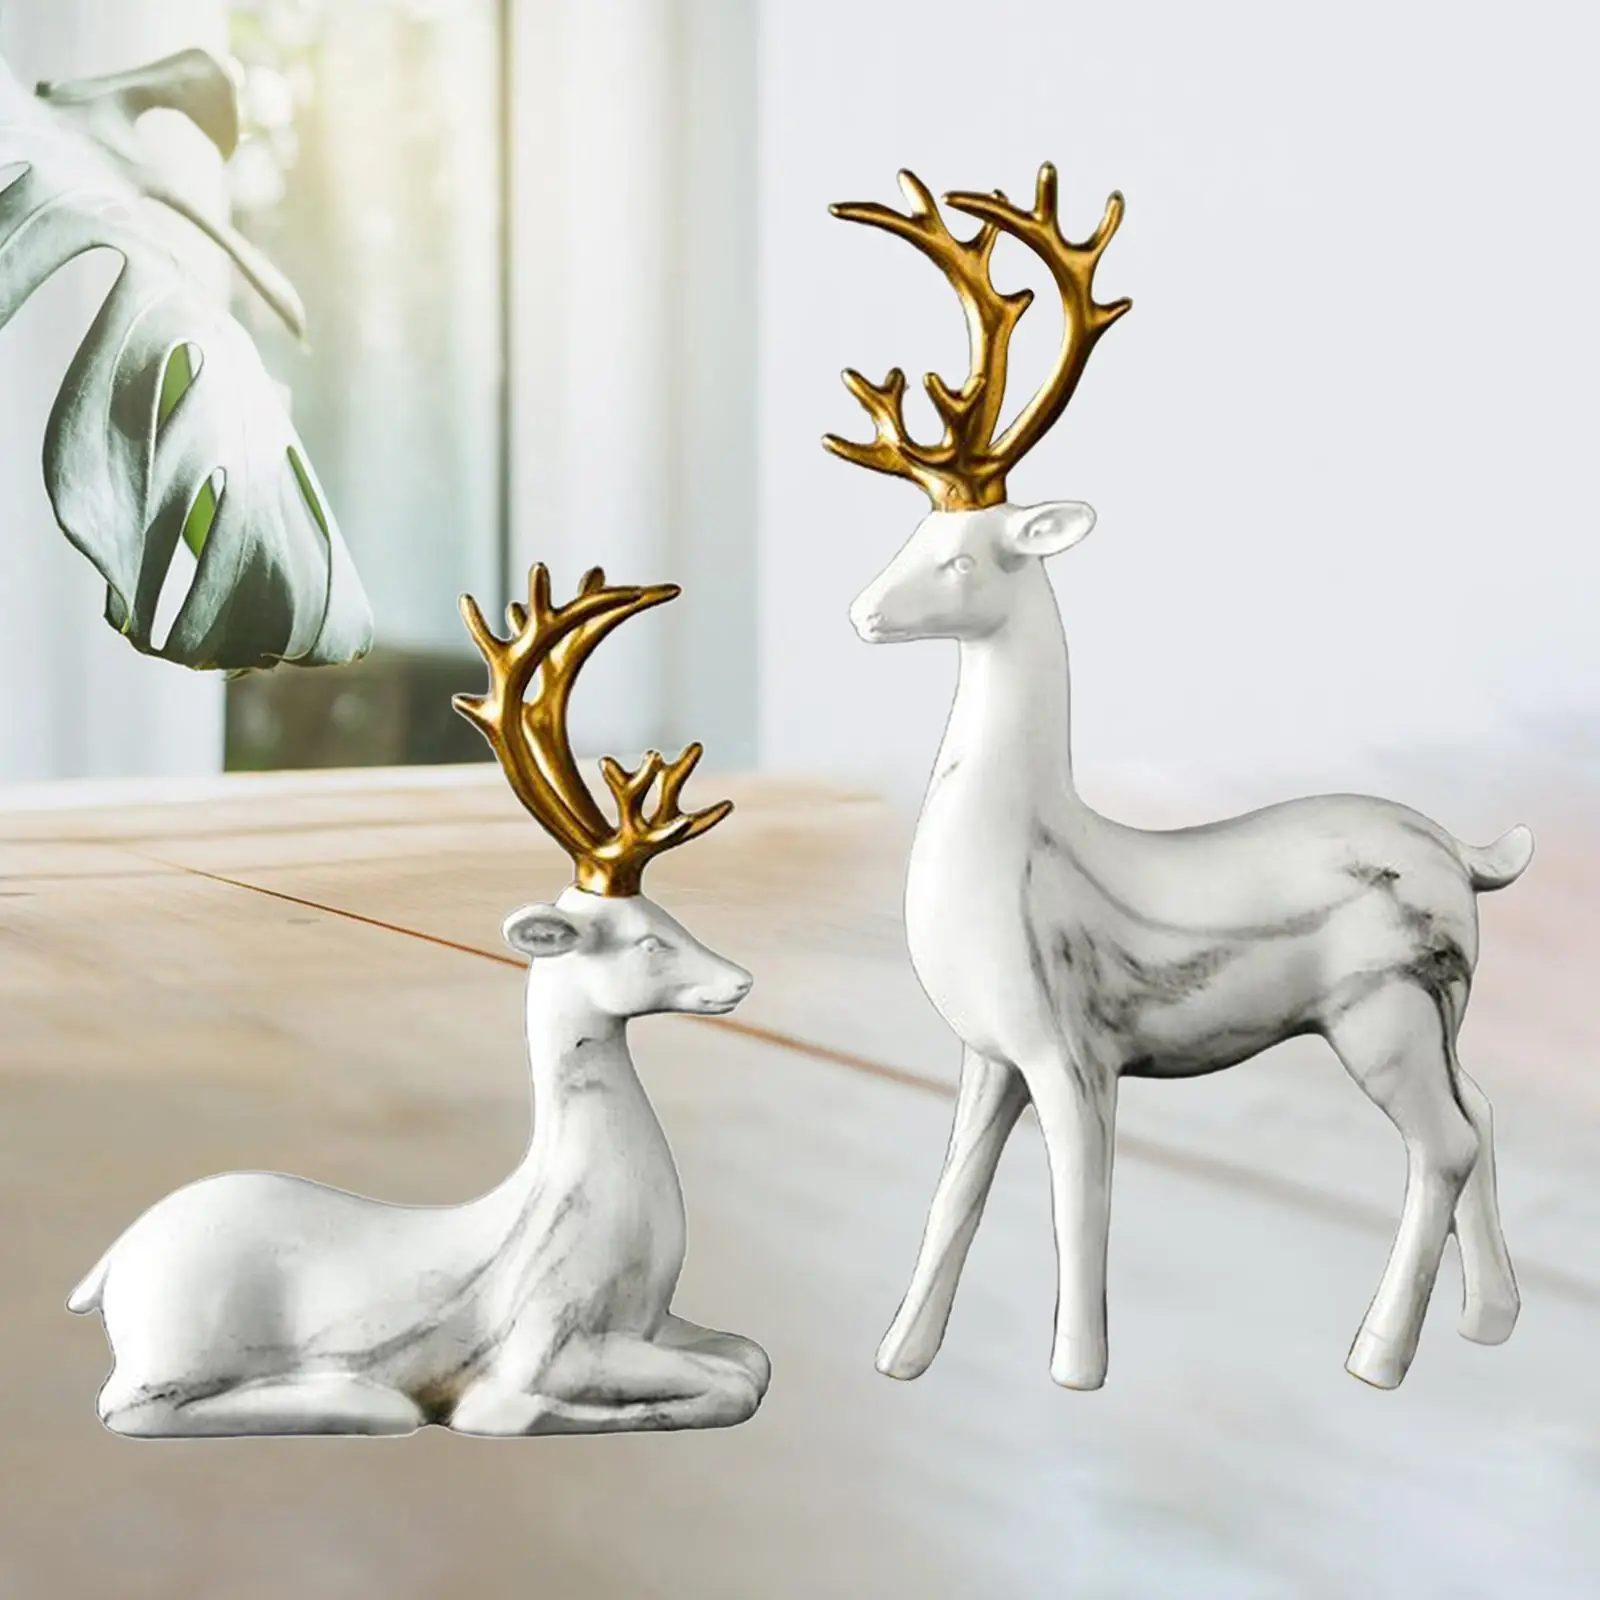 1 Pair Resin SculptureS, Home Decor Elk Deer Statue Tabletop Ornaments, Housewarming Gifts